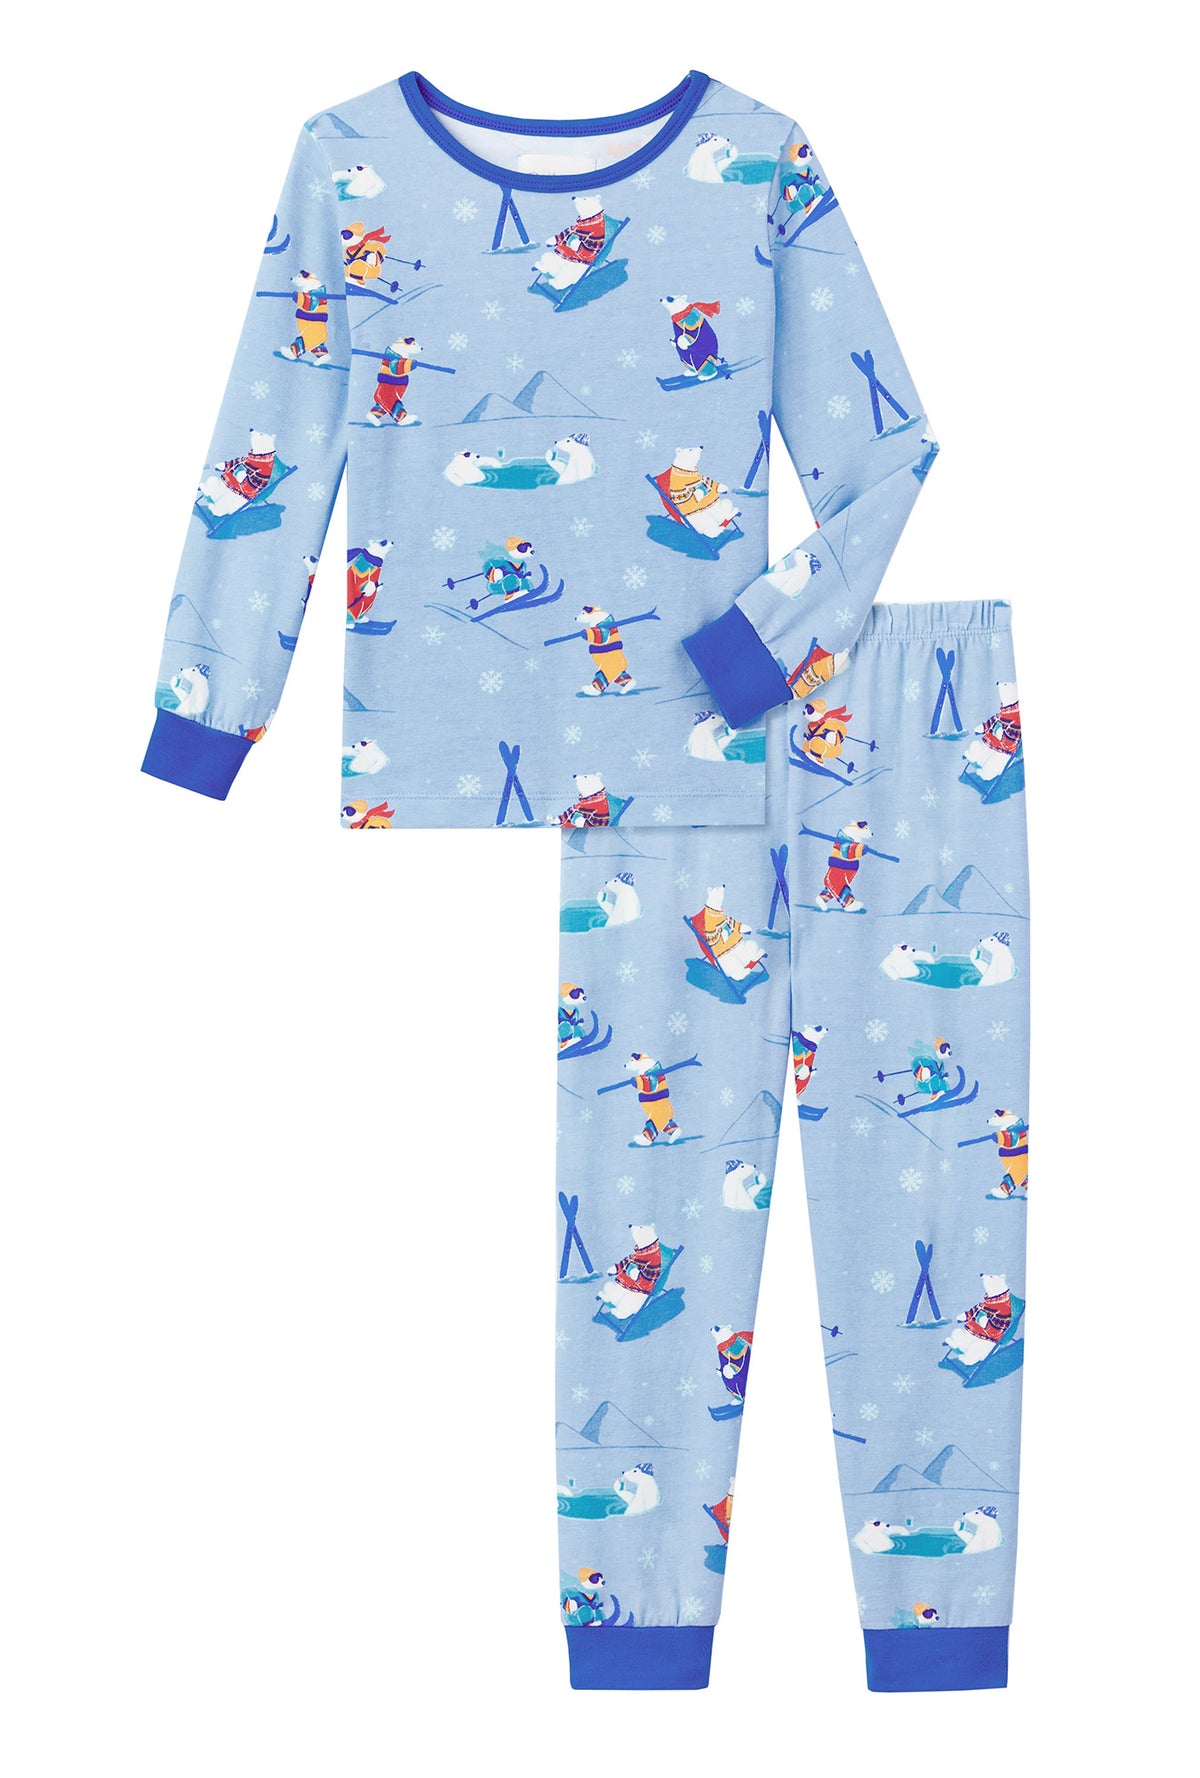 A  light blue Long Sleeve Stretch Jersey Kids PJ Set with Backcountry Bears print